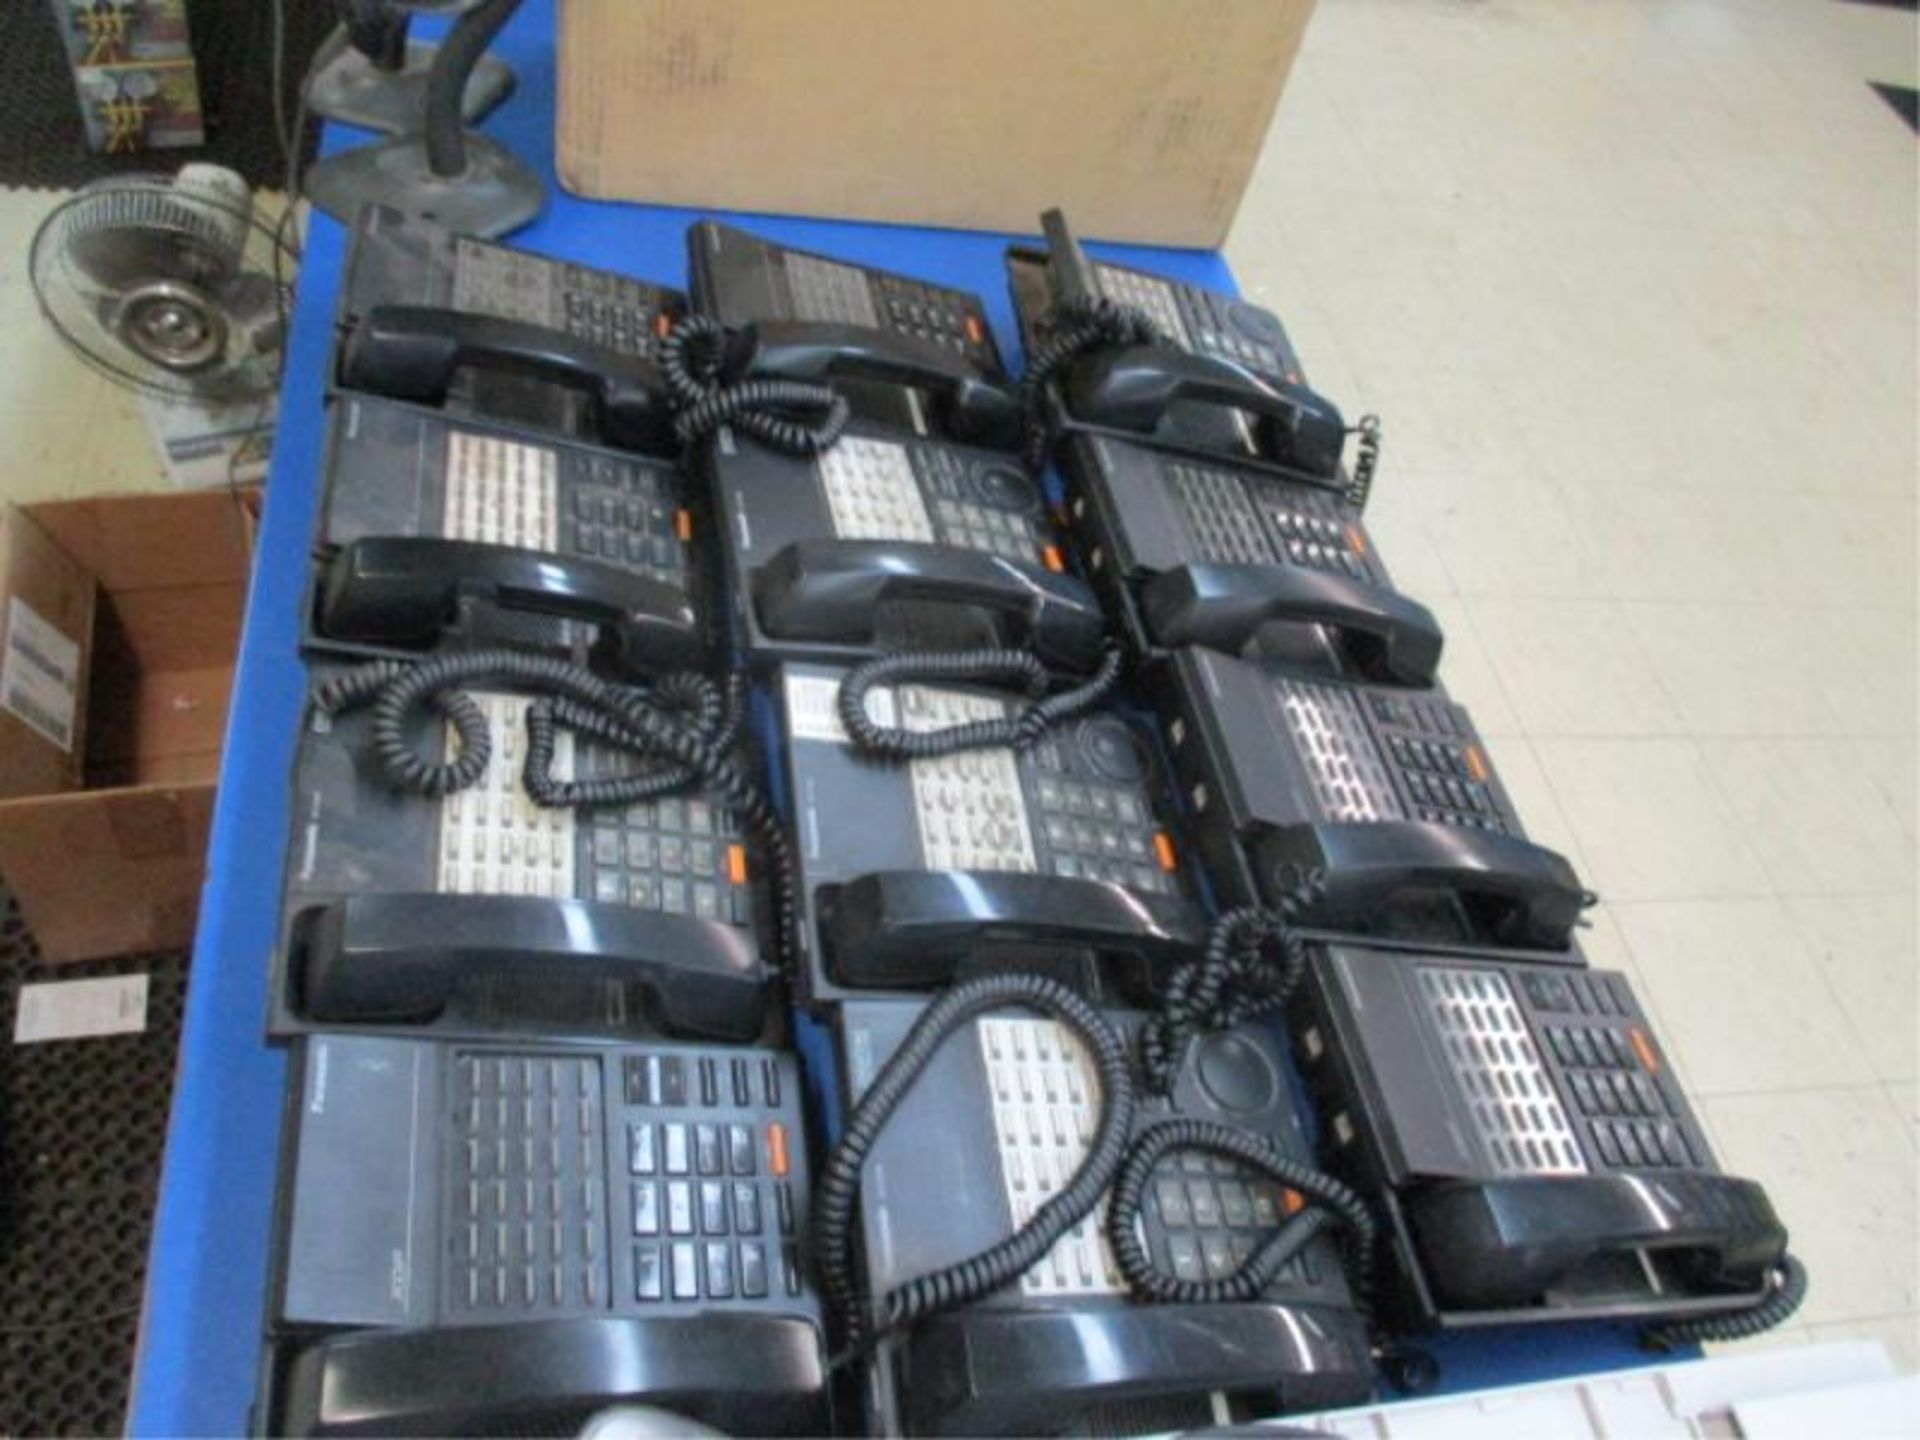 Panasonic Digital Hybrid Phone System Model:D1232 with Panasonic KX-T7425 and Similar Phones - Image 3 of 4